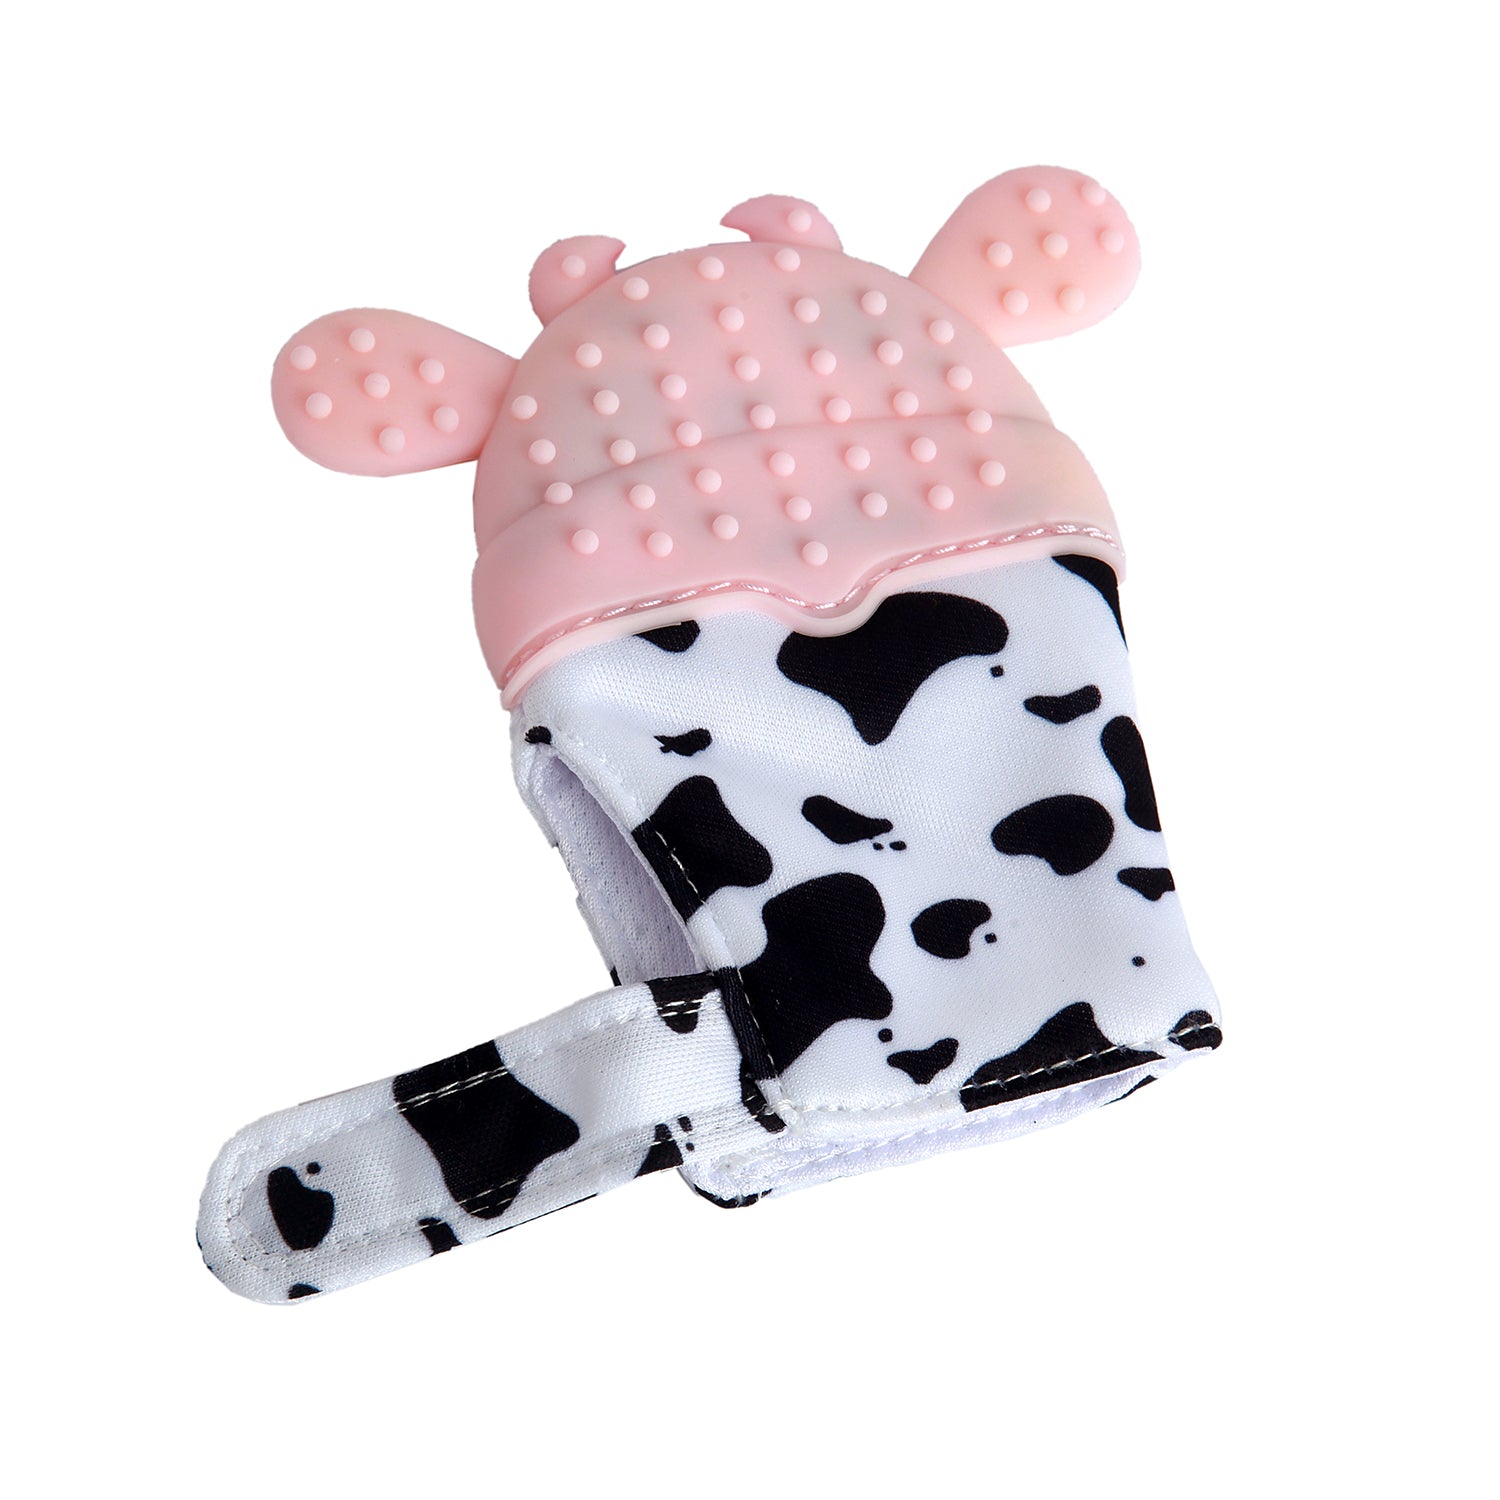 Winking Cow Pink Teething Mitten - 1 pc - Baby Moo